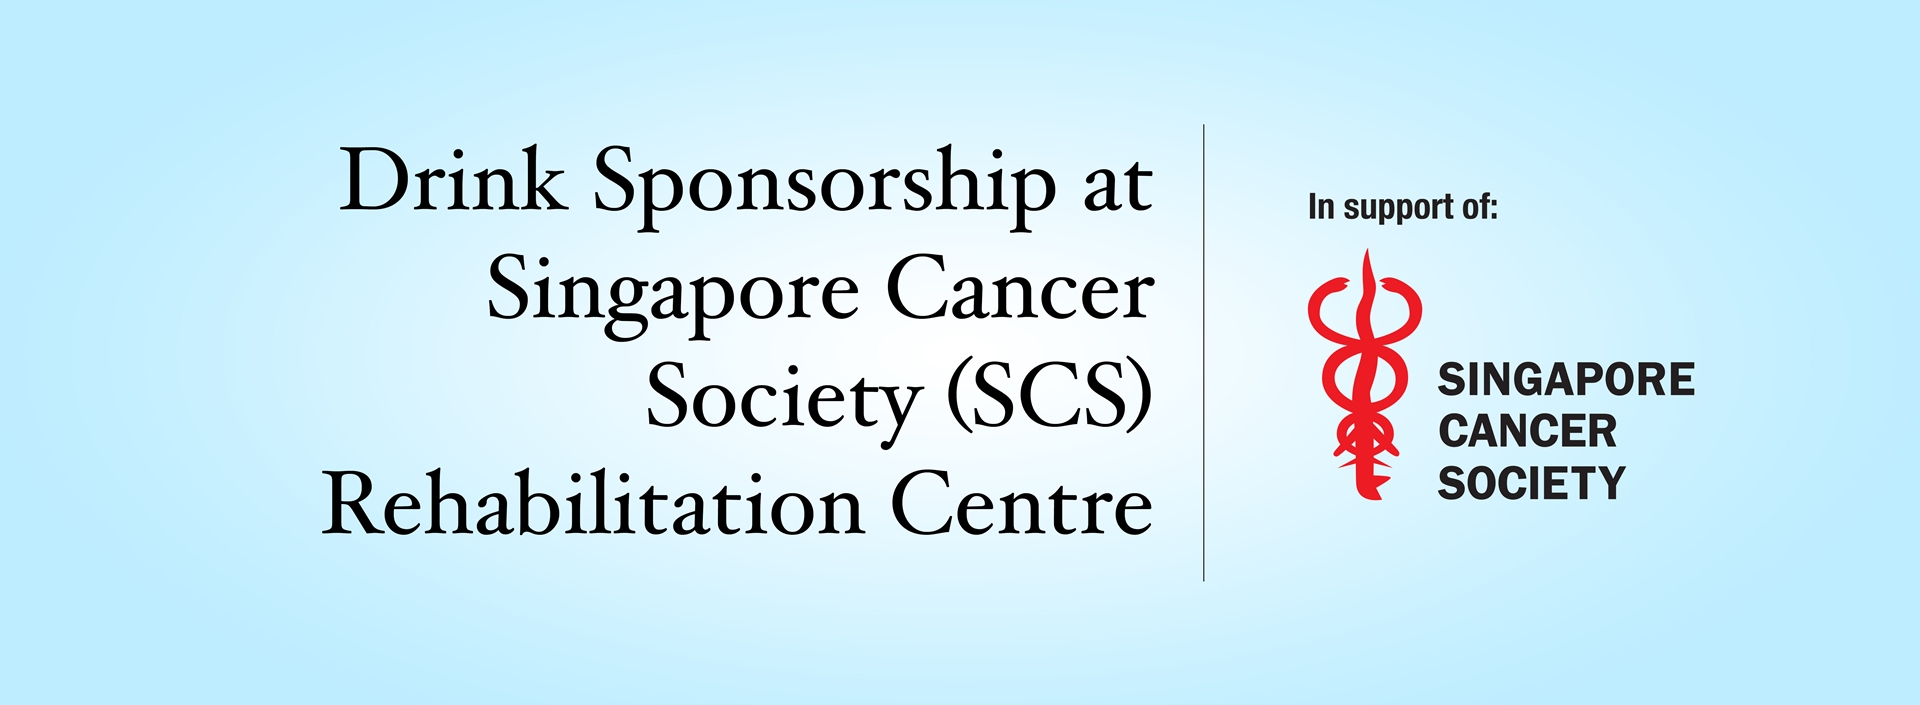 Singapore Cancer Society (SCS) Rehabilitation Centre - Drink Sponsorship